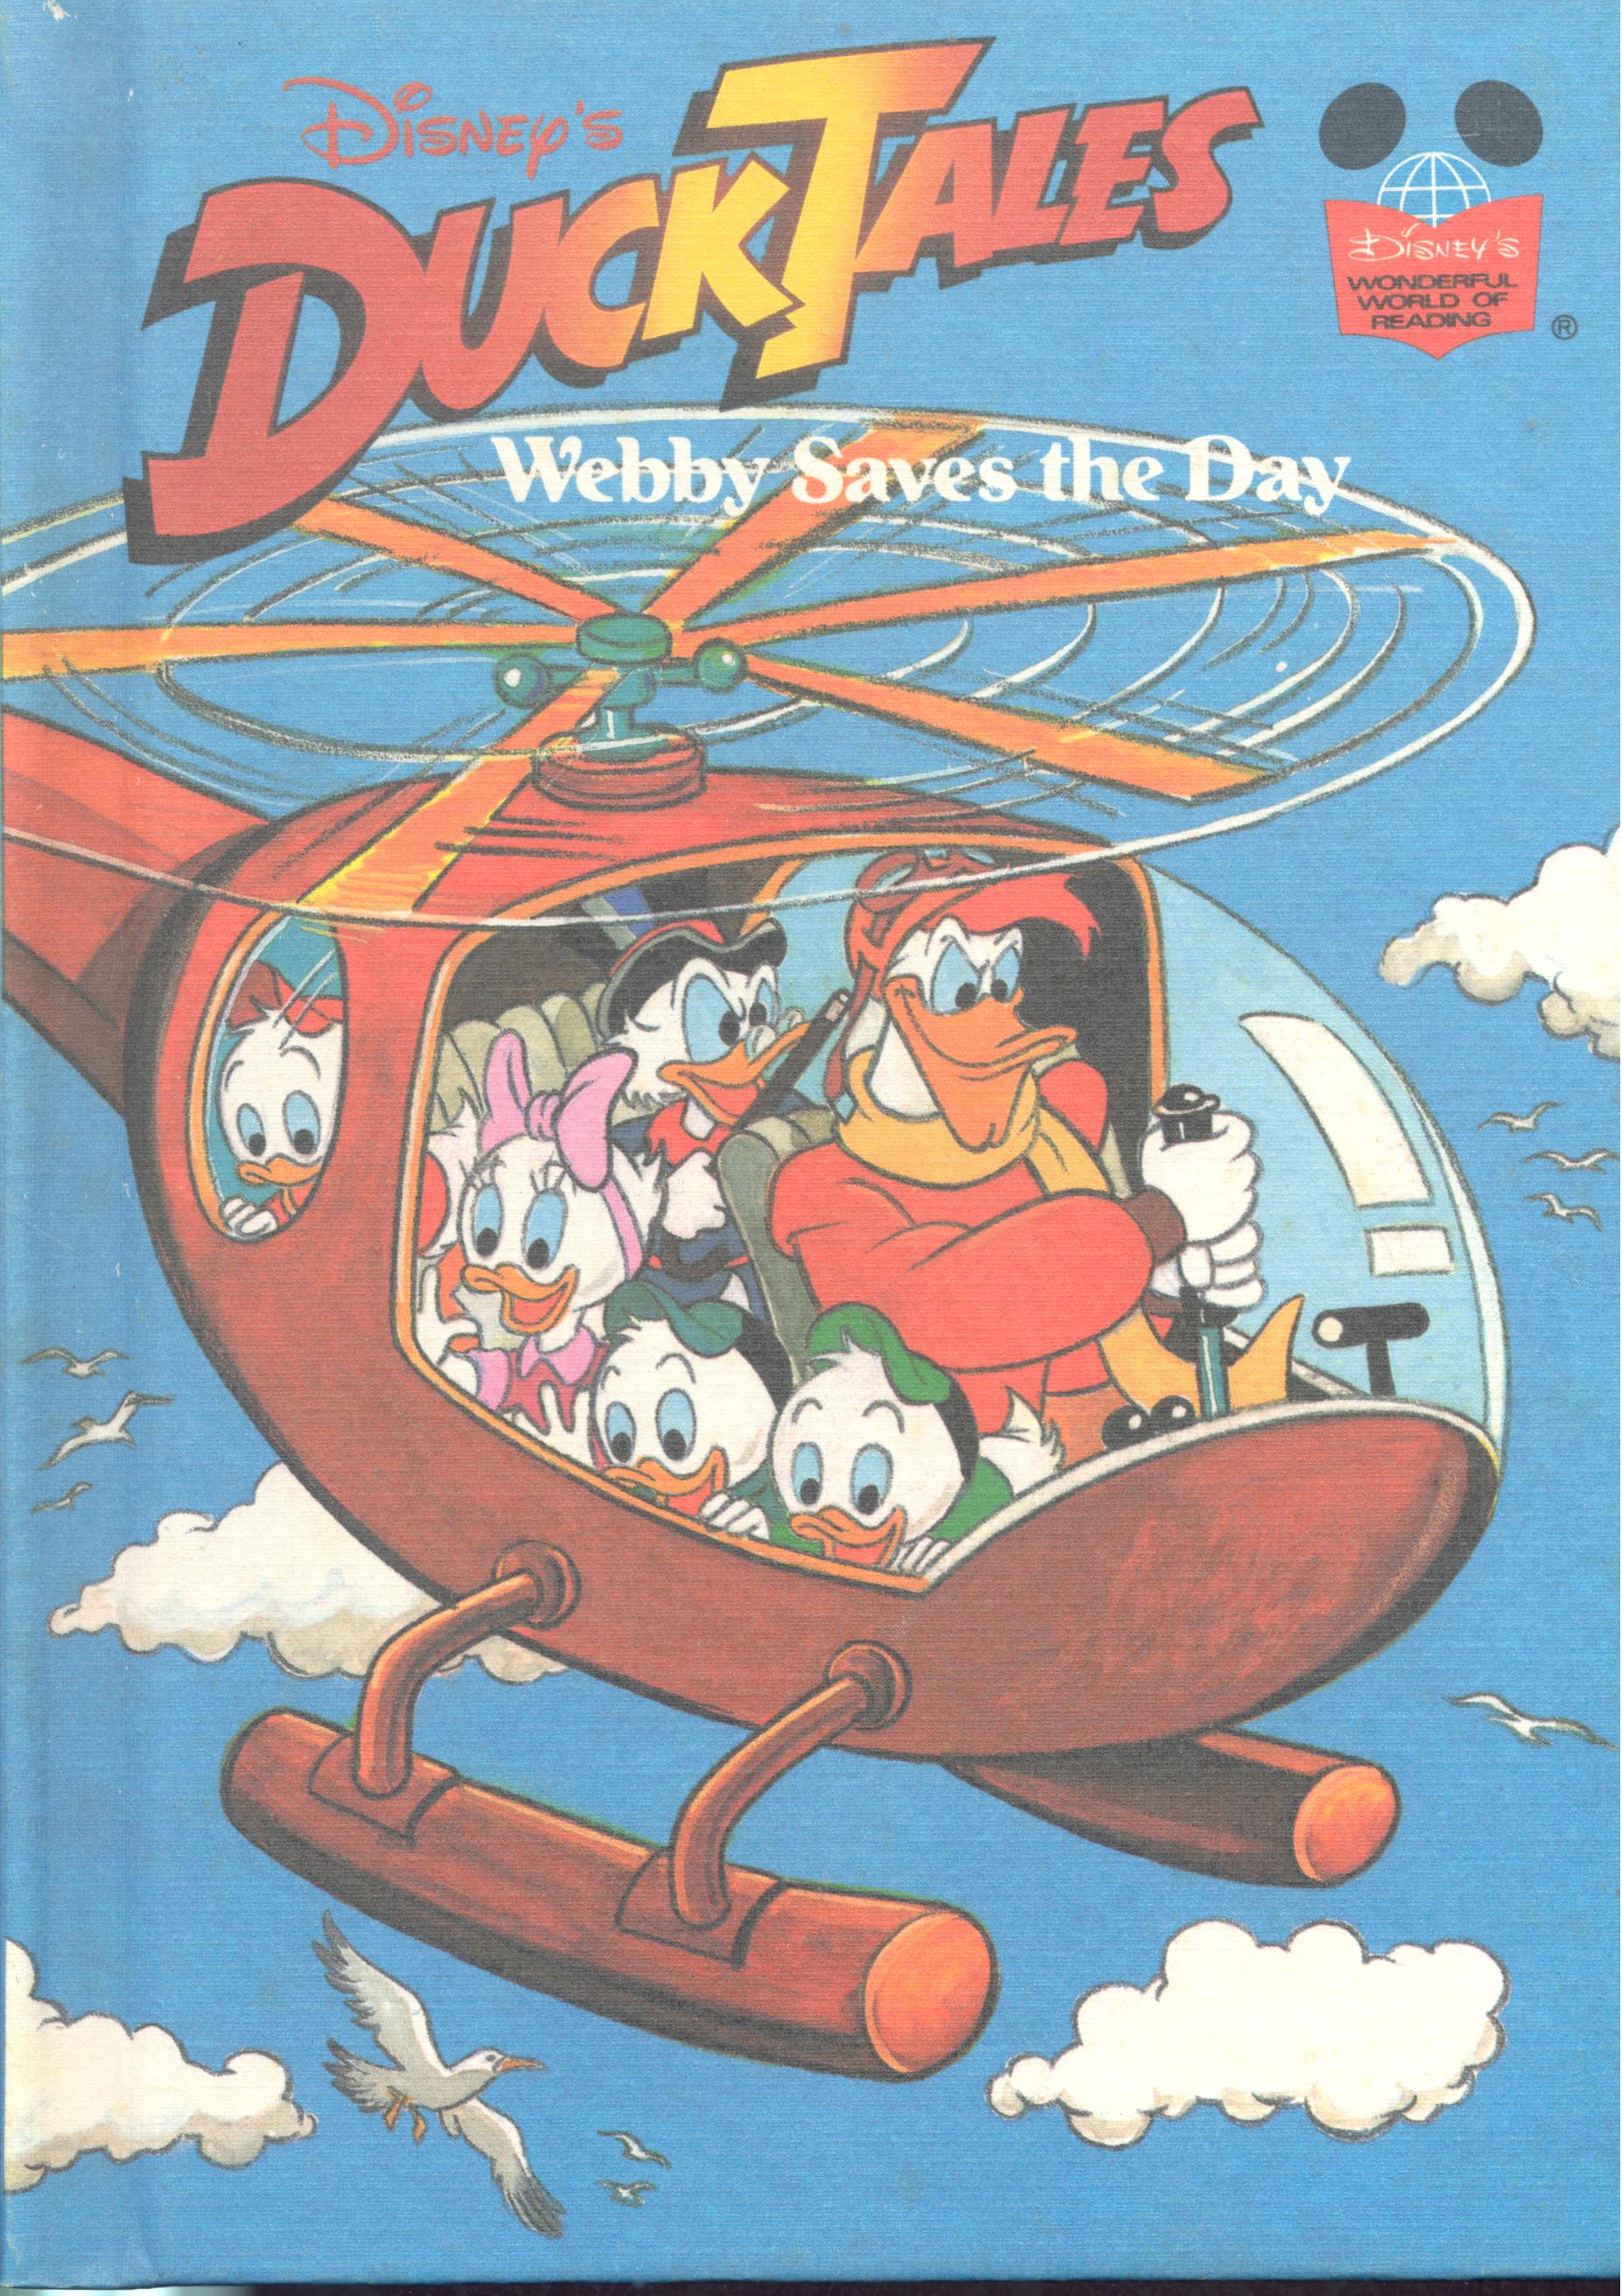 Walt Disney' s across ducktales webby saves the day.